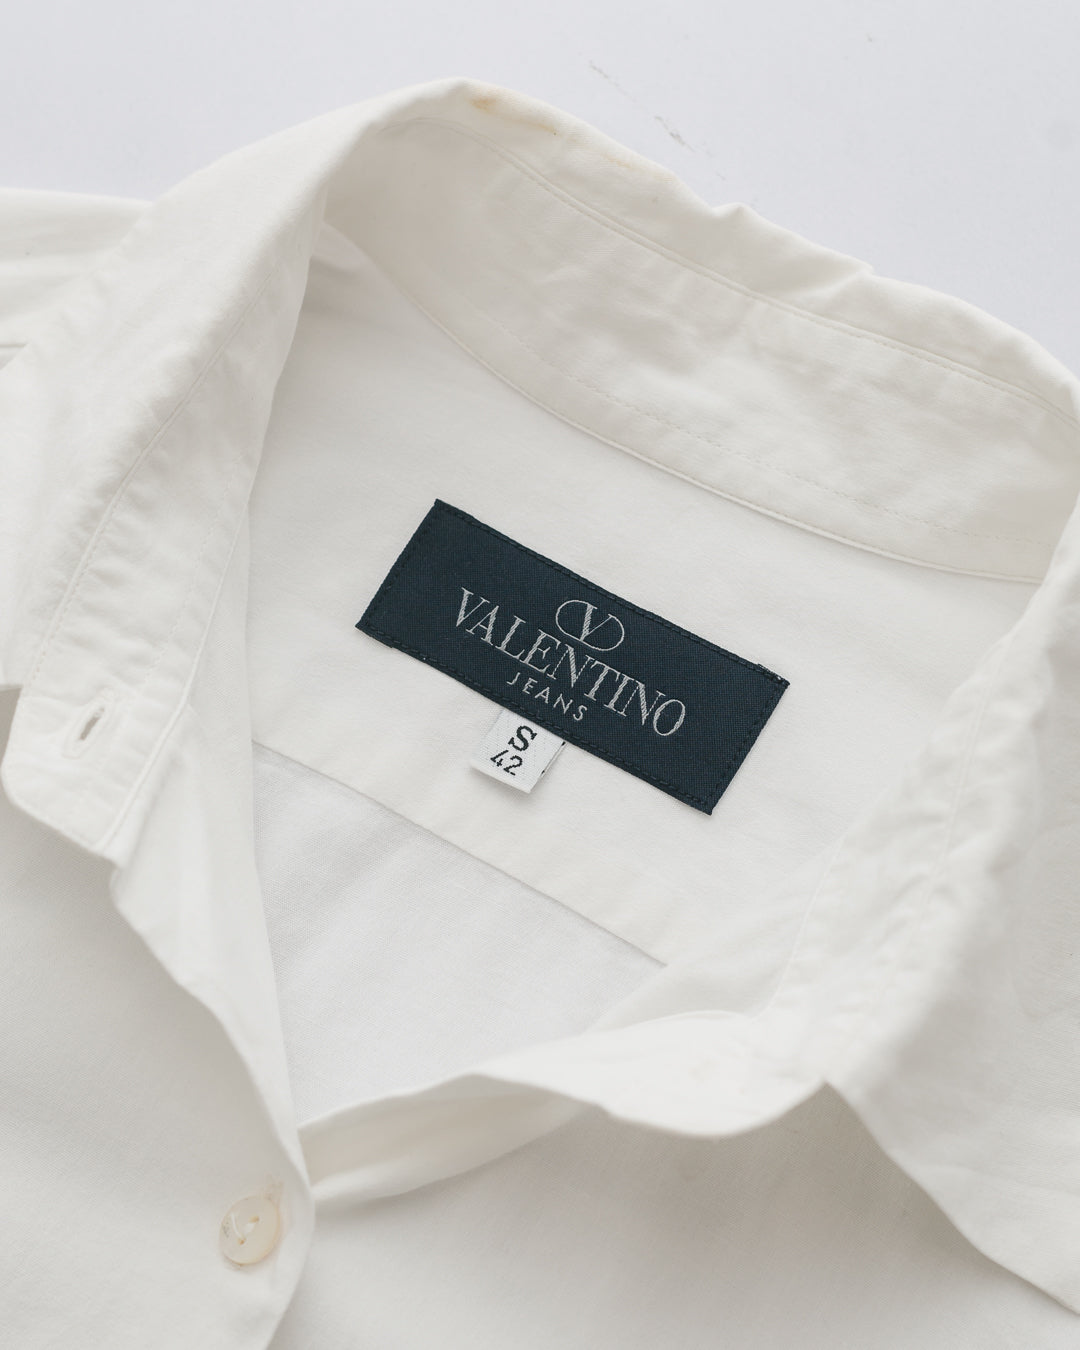 Valentino Jeans Minimalist Button Down